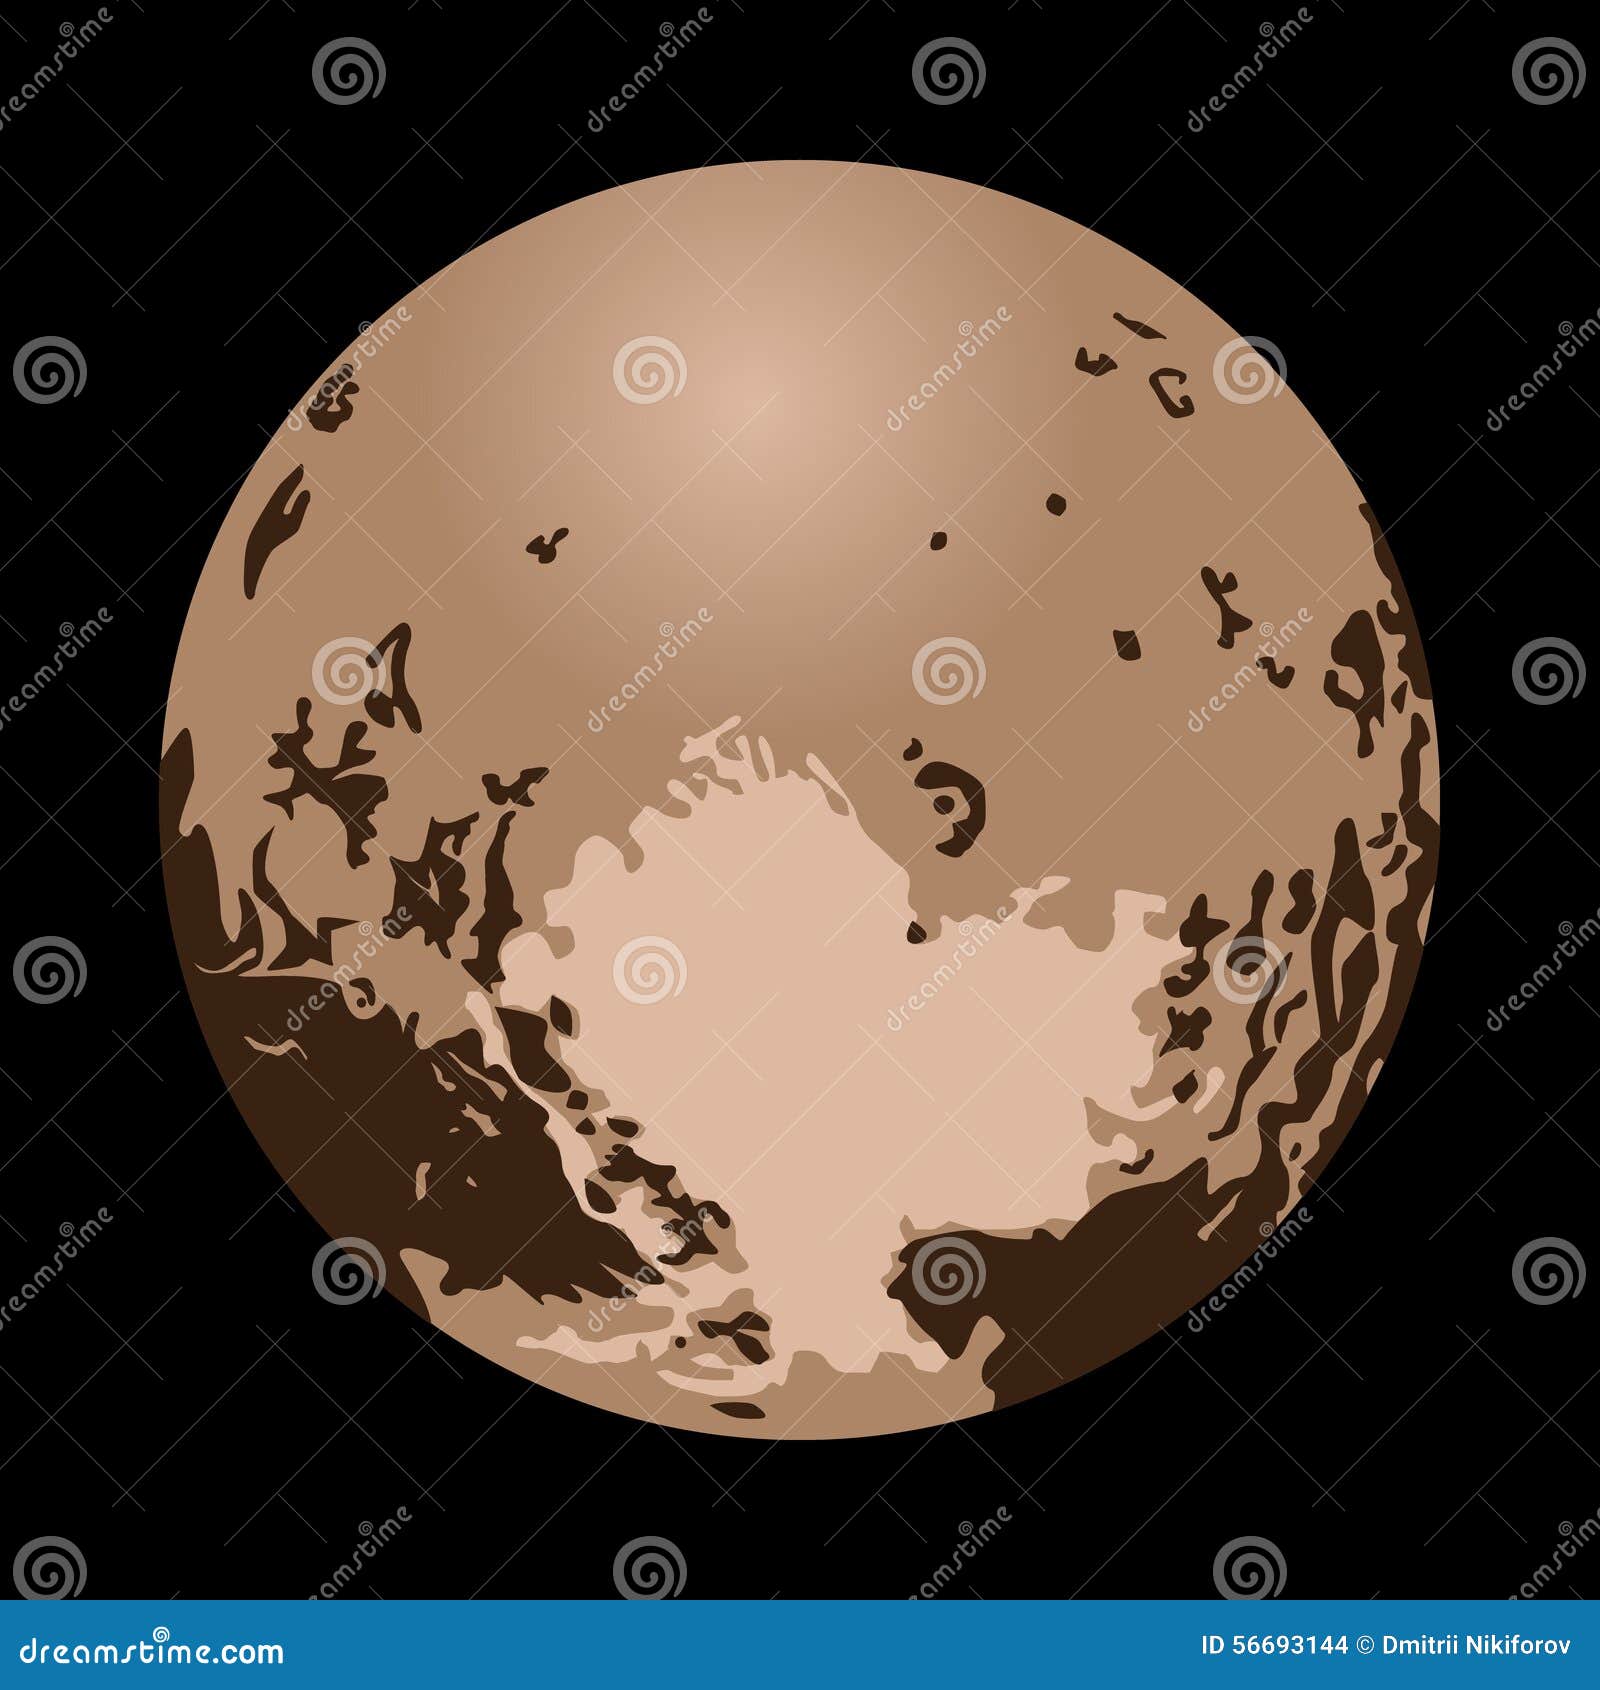 Плутон рисунок